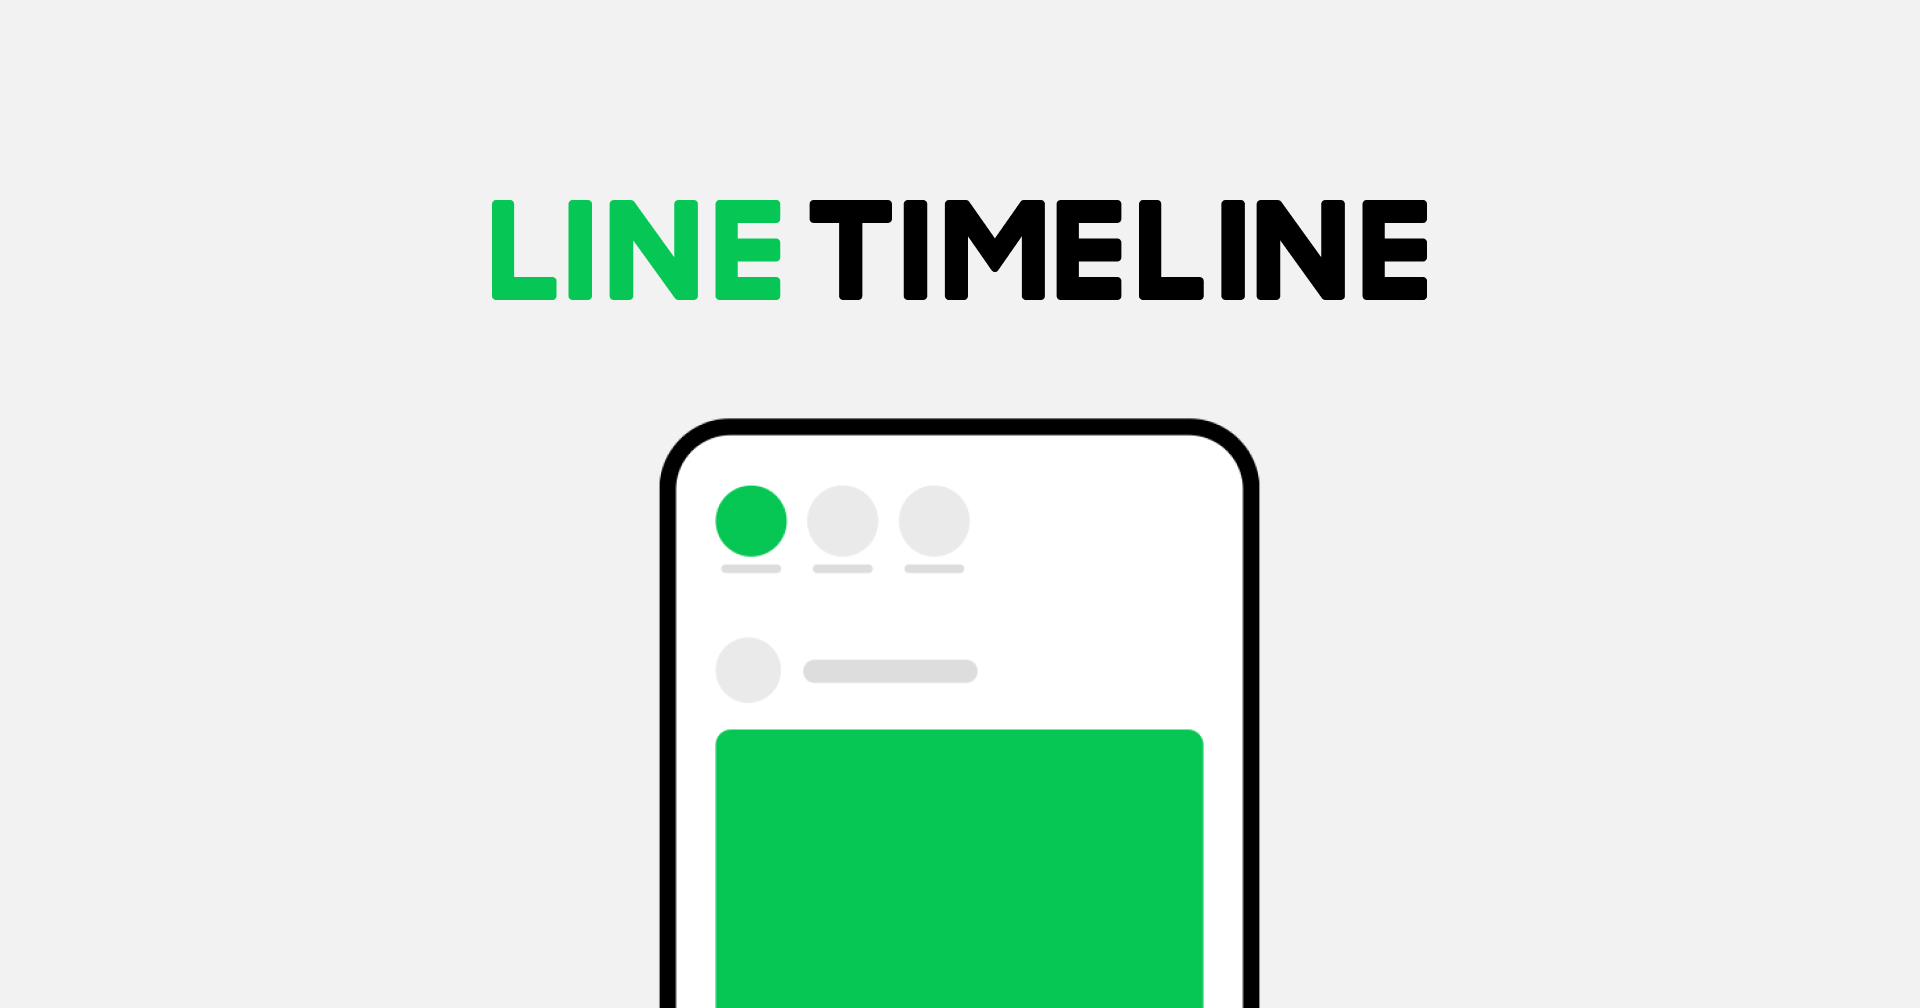 LINE ปรับไม่ต้องเพิ่มเพื่อนก็ติดตาม TIMELINE ได้ เข้าสู่วงการ Social Network เต็มตัว